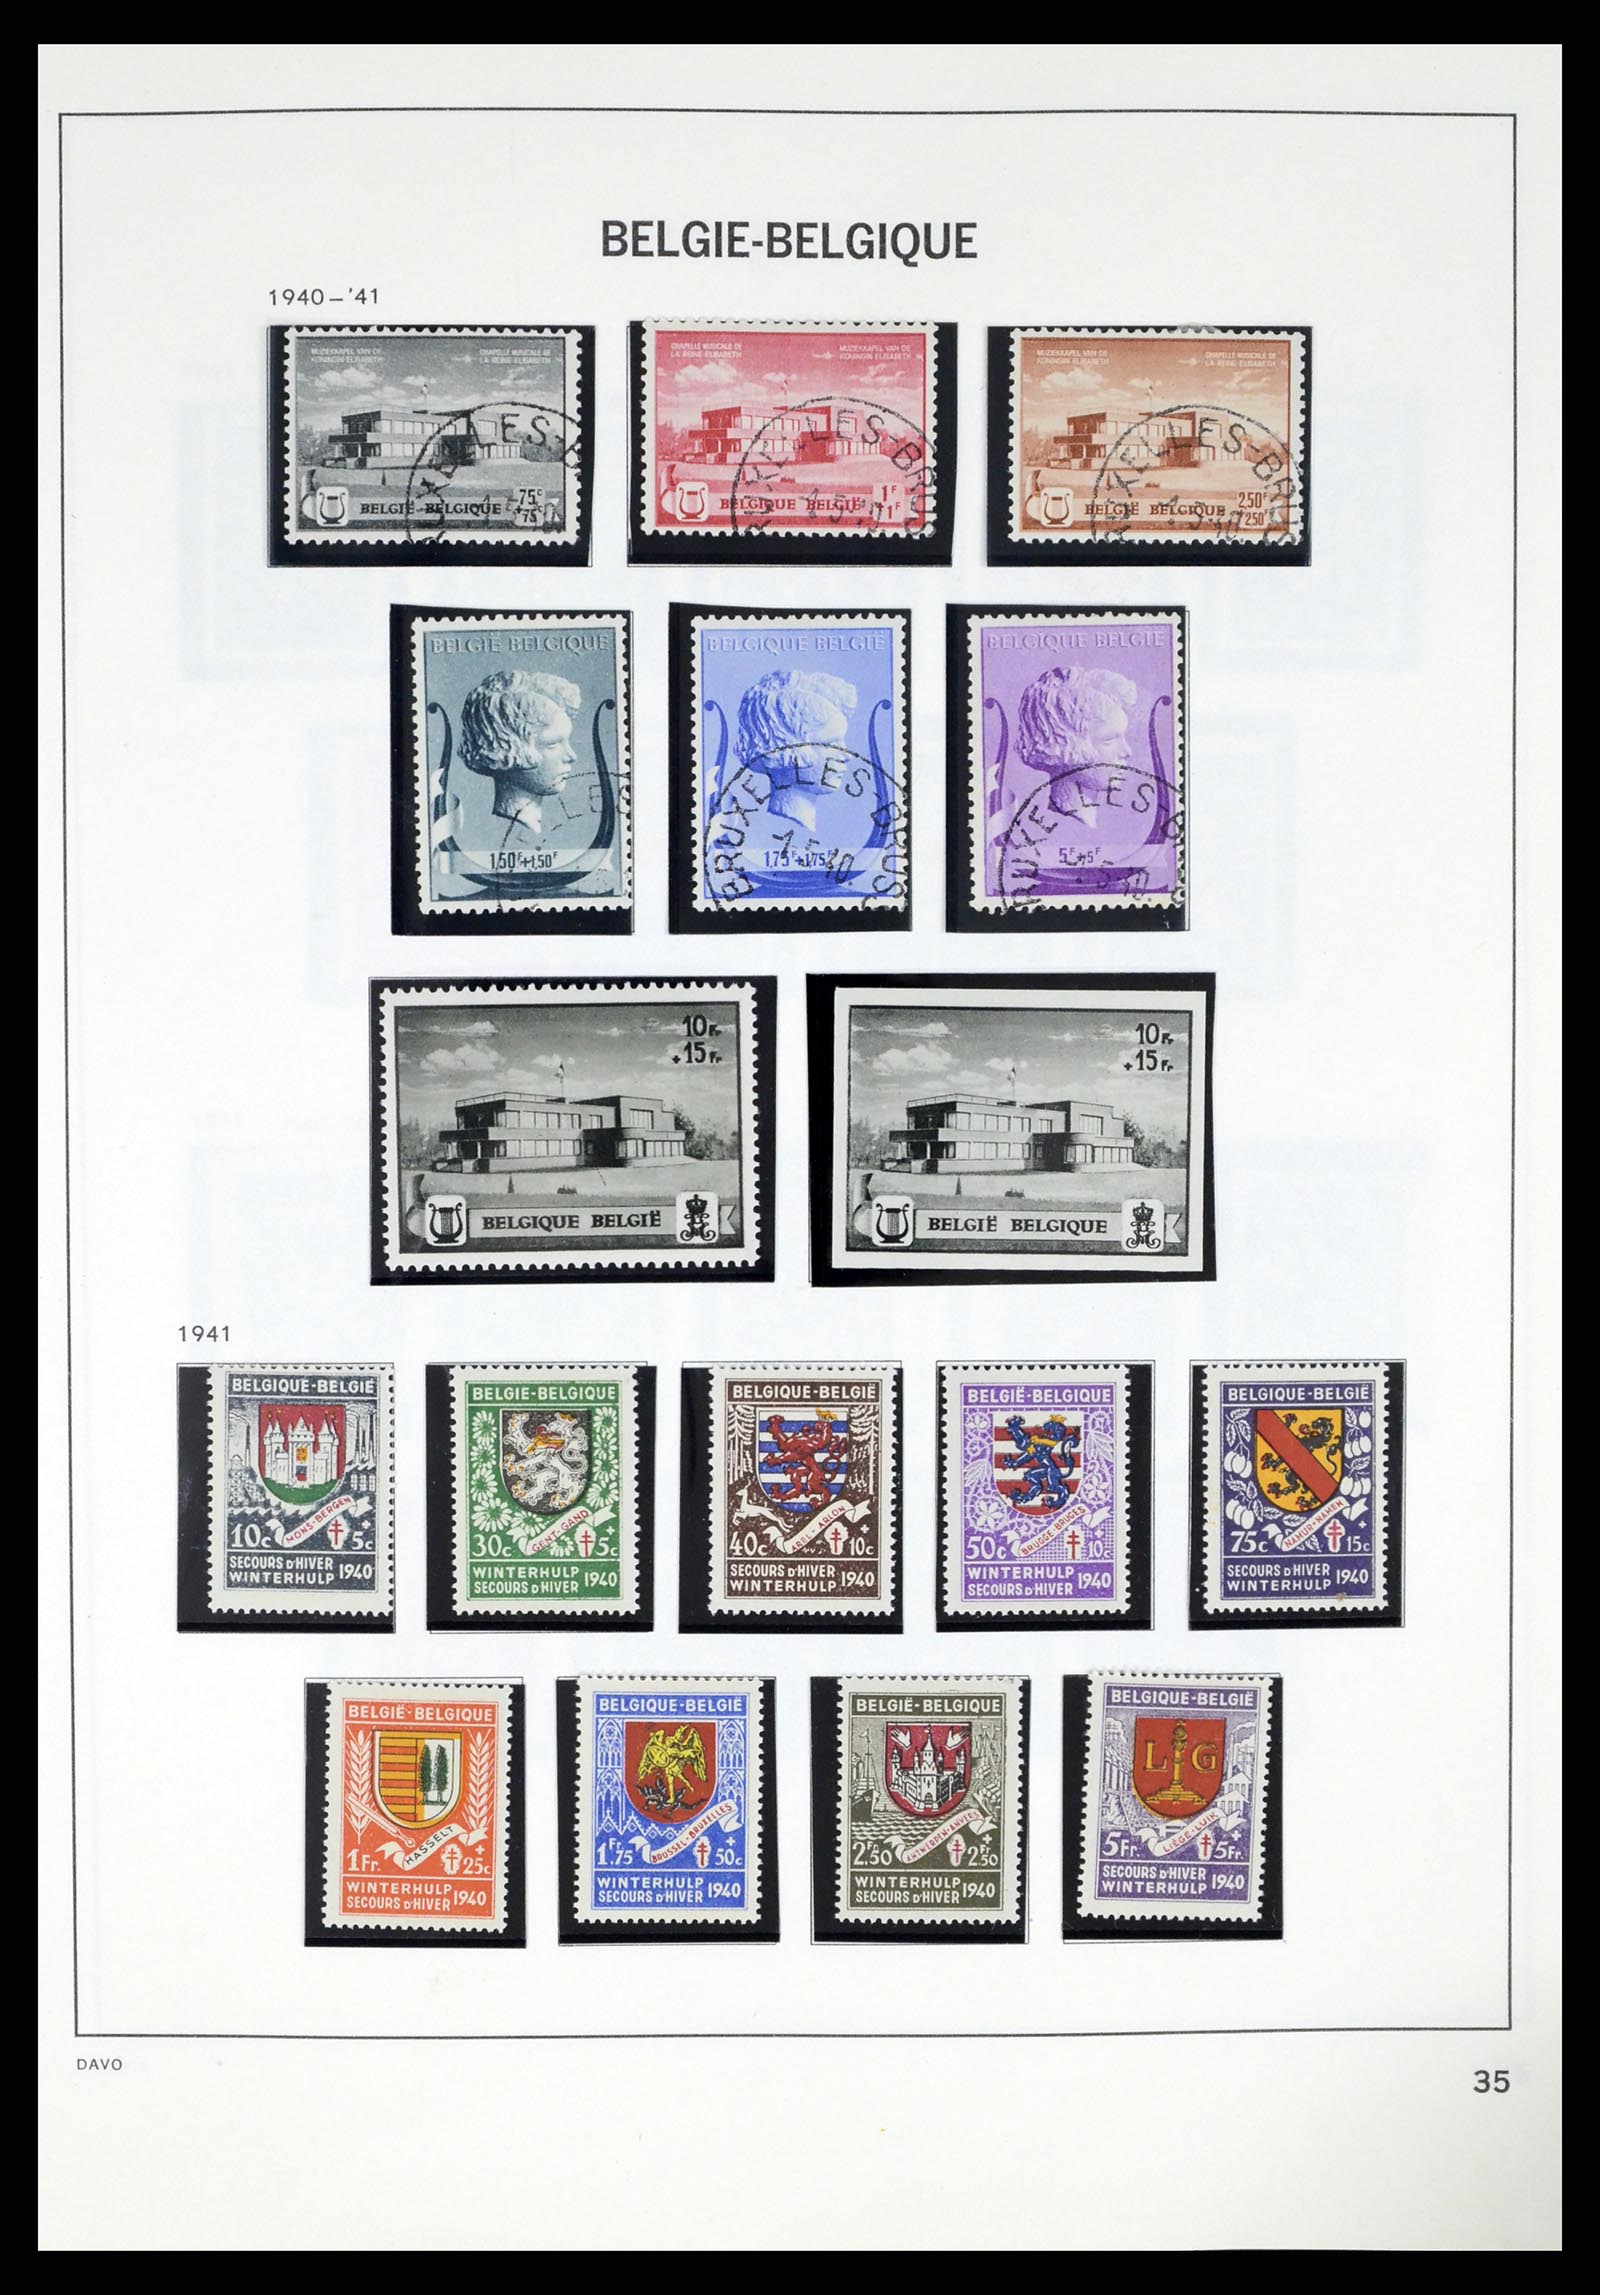 37367 033 - Stamp collection 37367 Belgium 1849-2003.